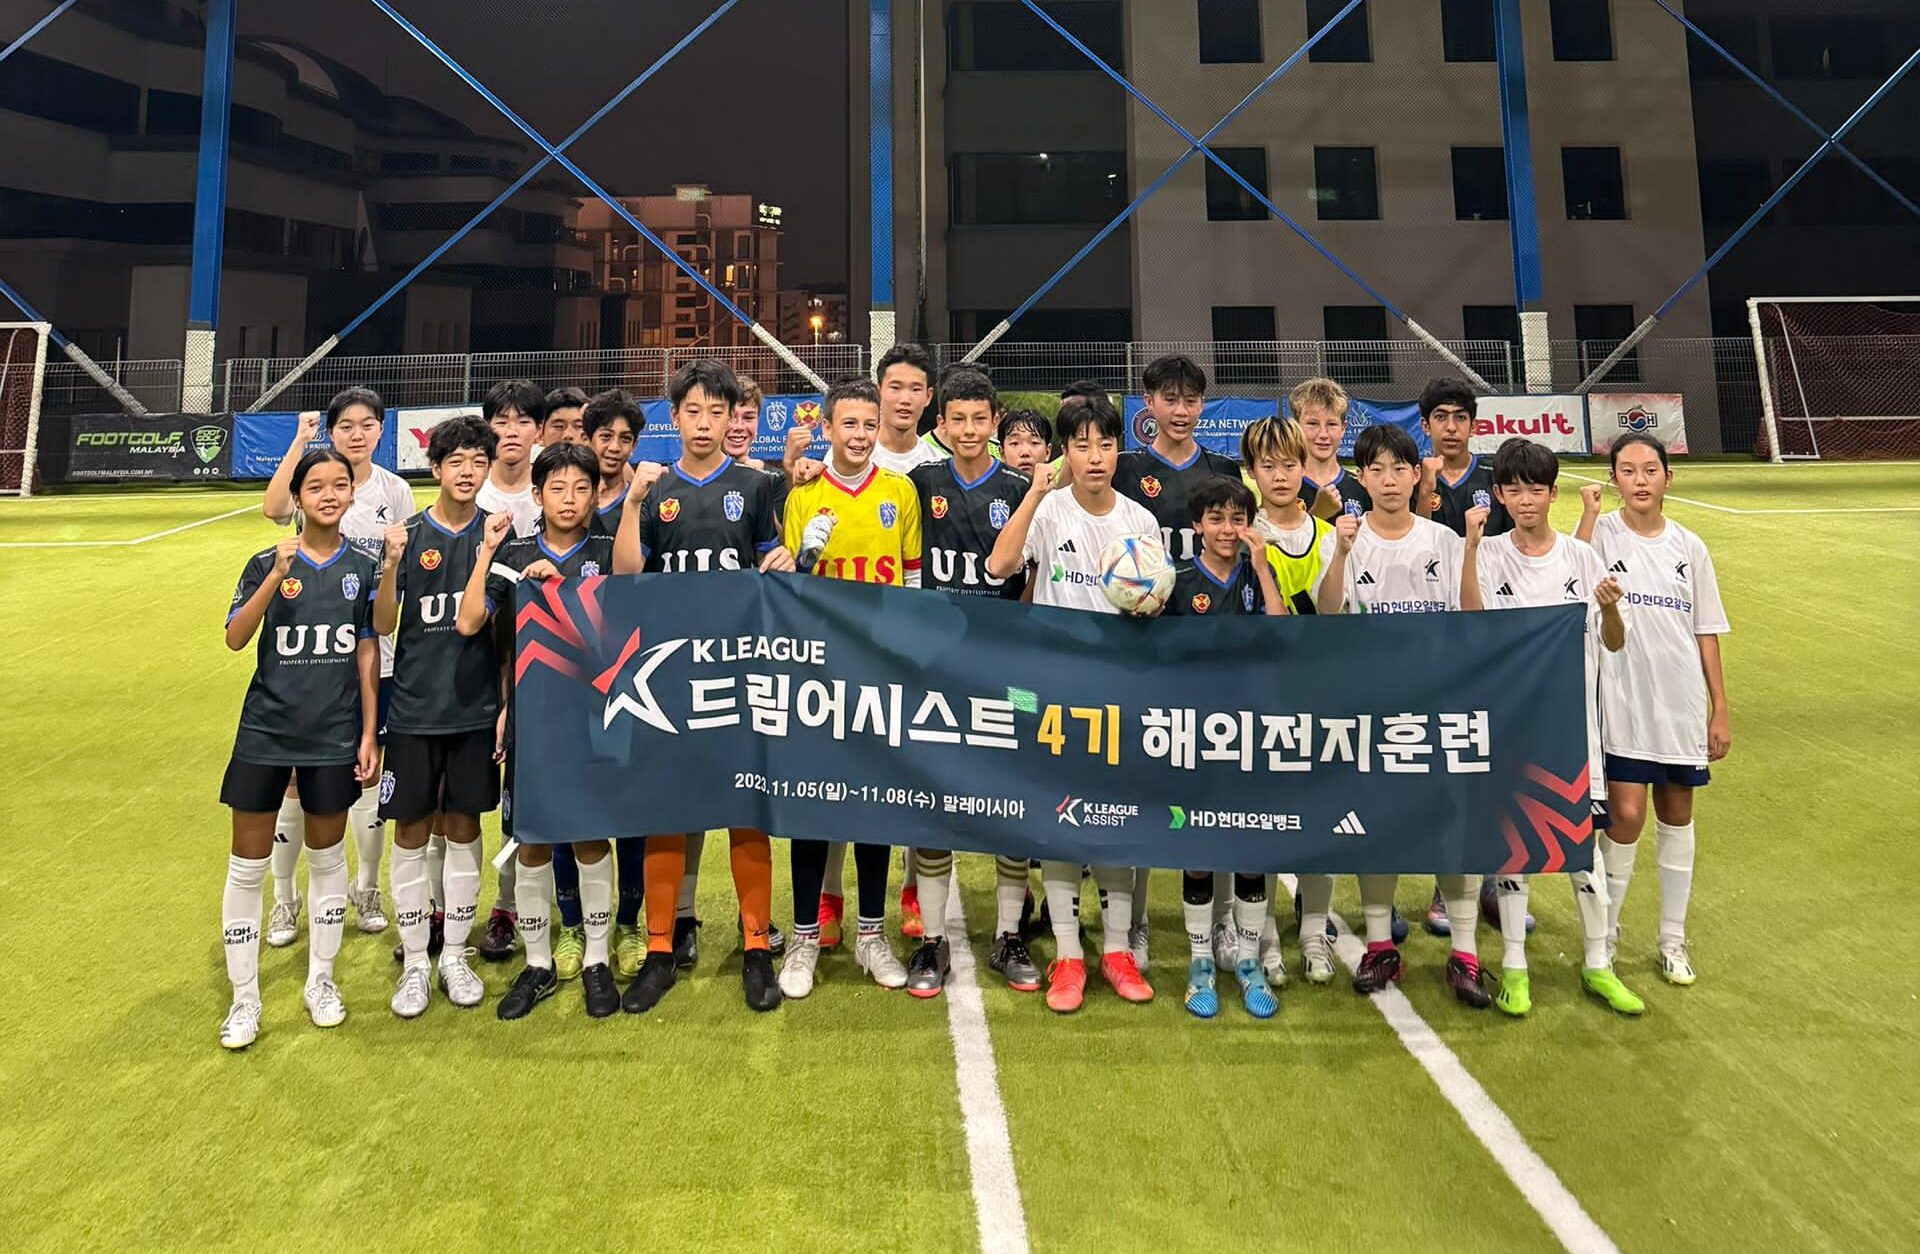 KDH Football Academy's U13 Takes on Korea U13 in a Special Friendly Match